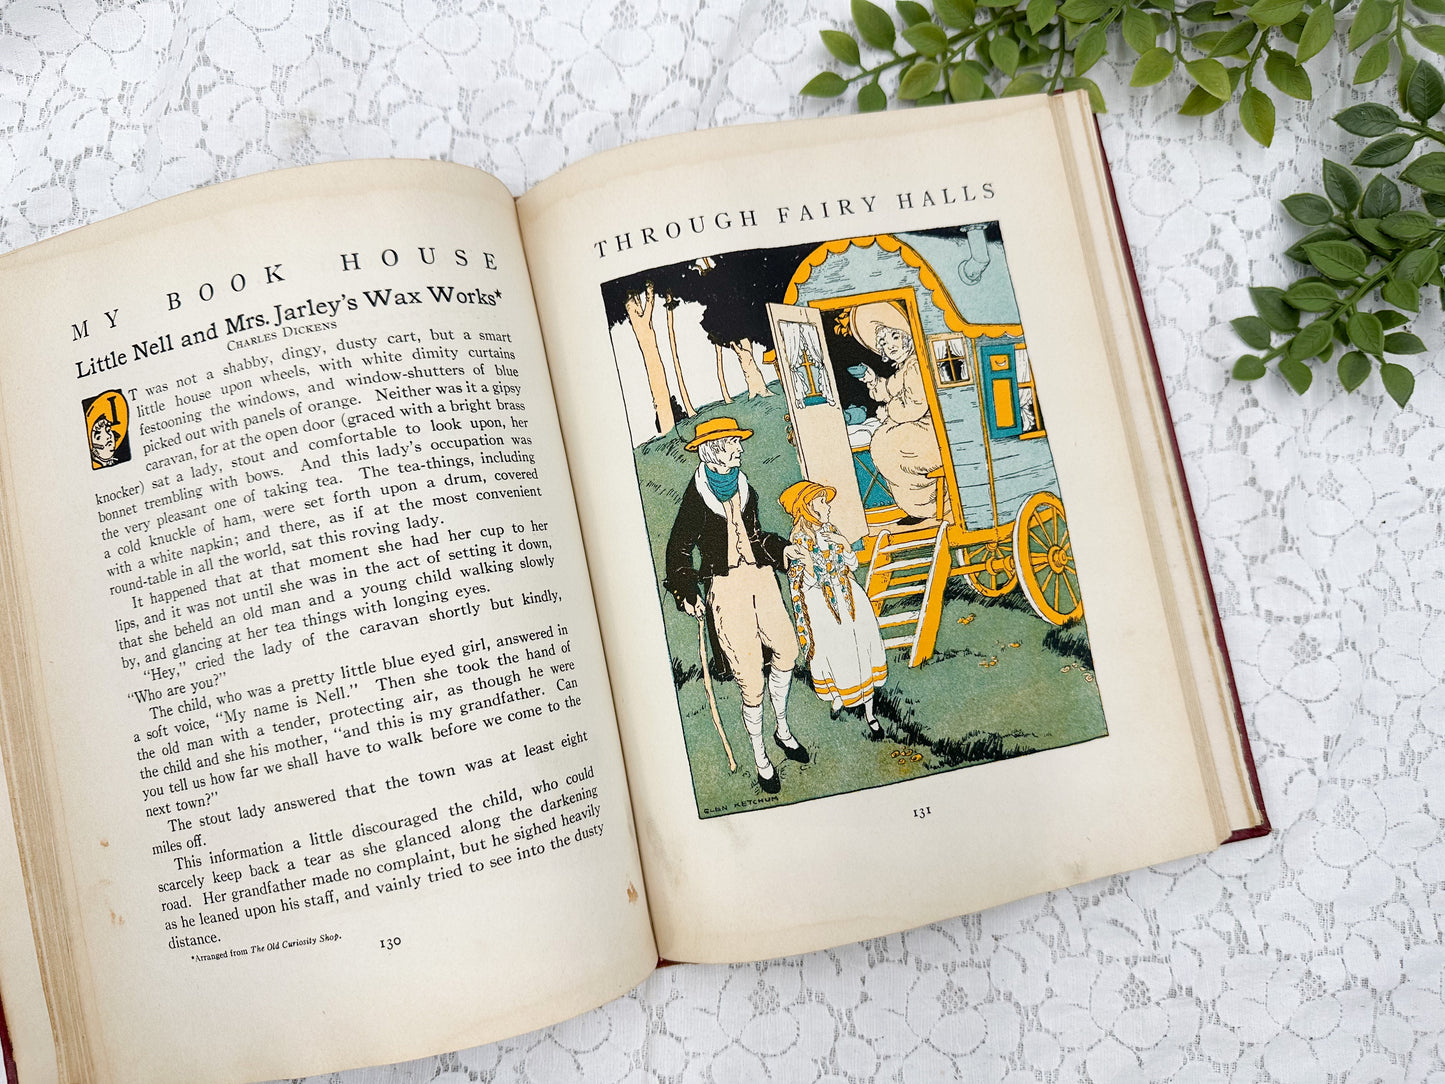 Book House Through Fairy Tales- 1928